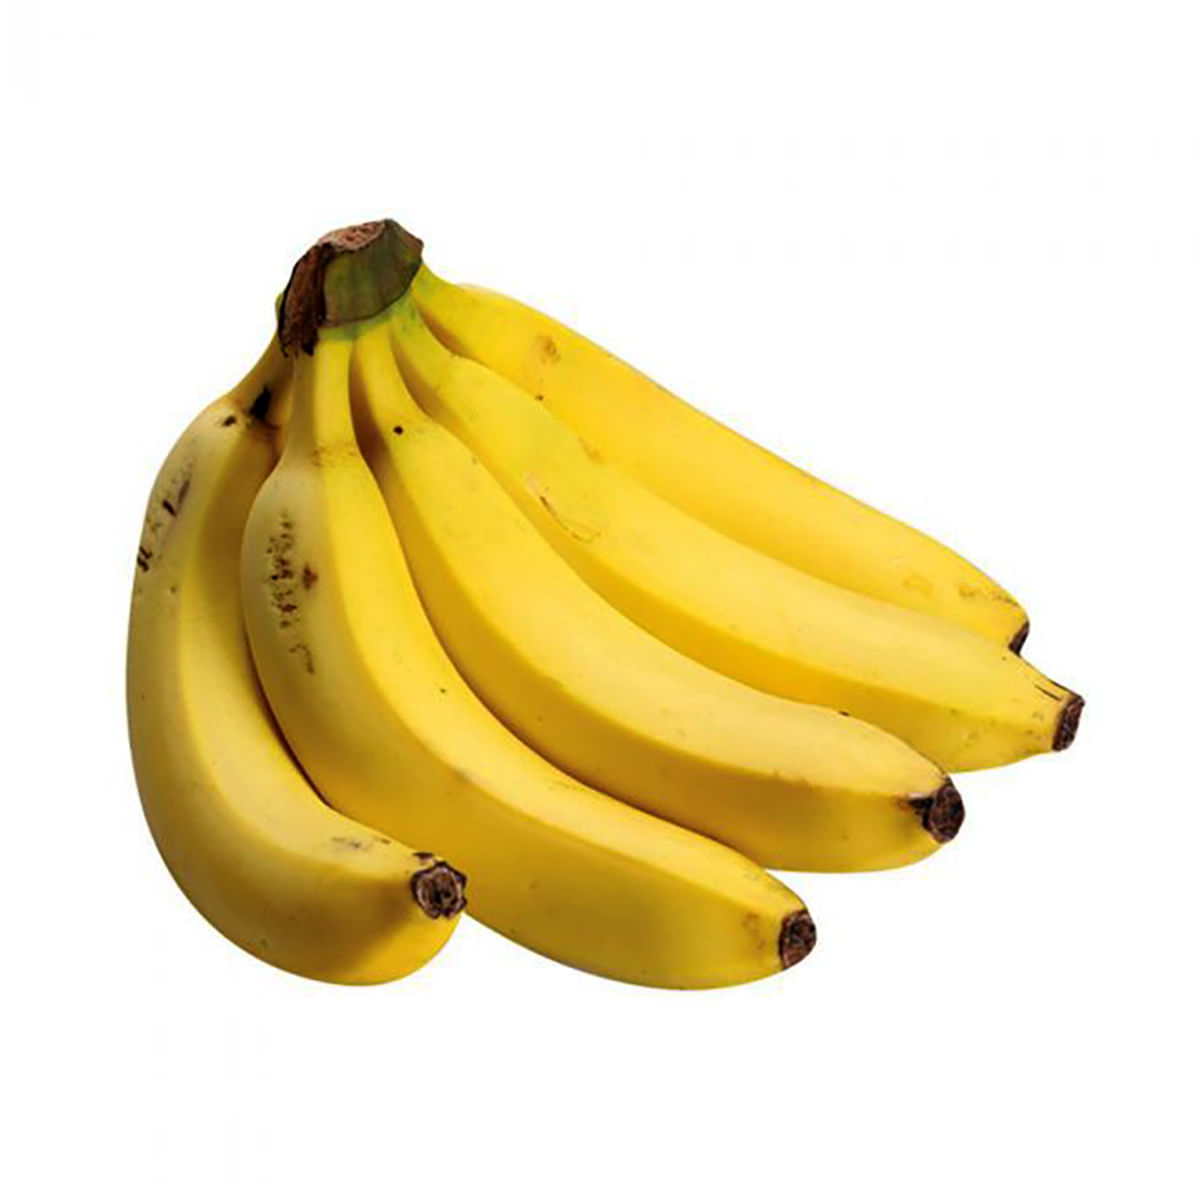 banana-nanica-carrefour-700-g-1.jpg